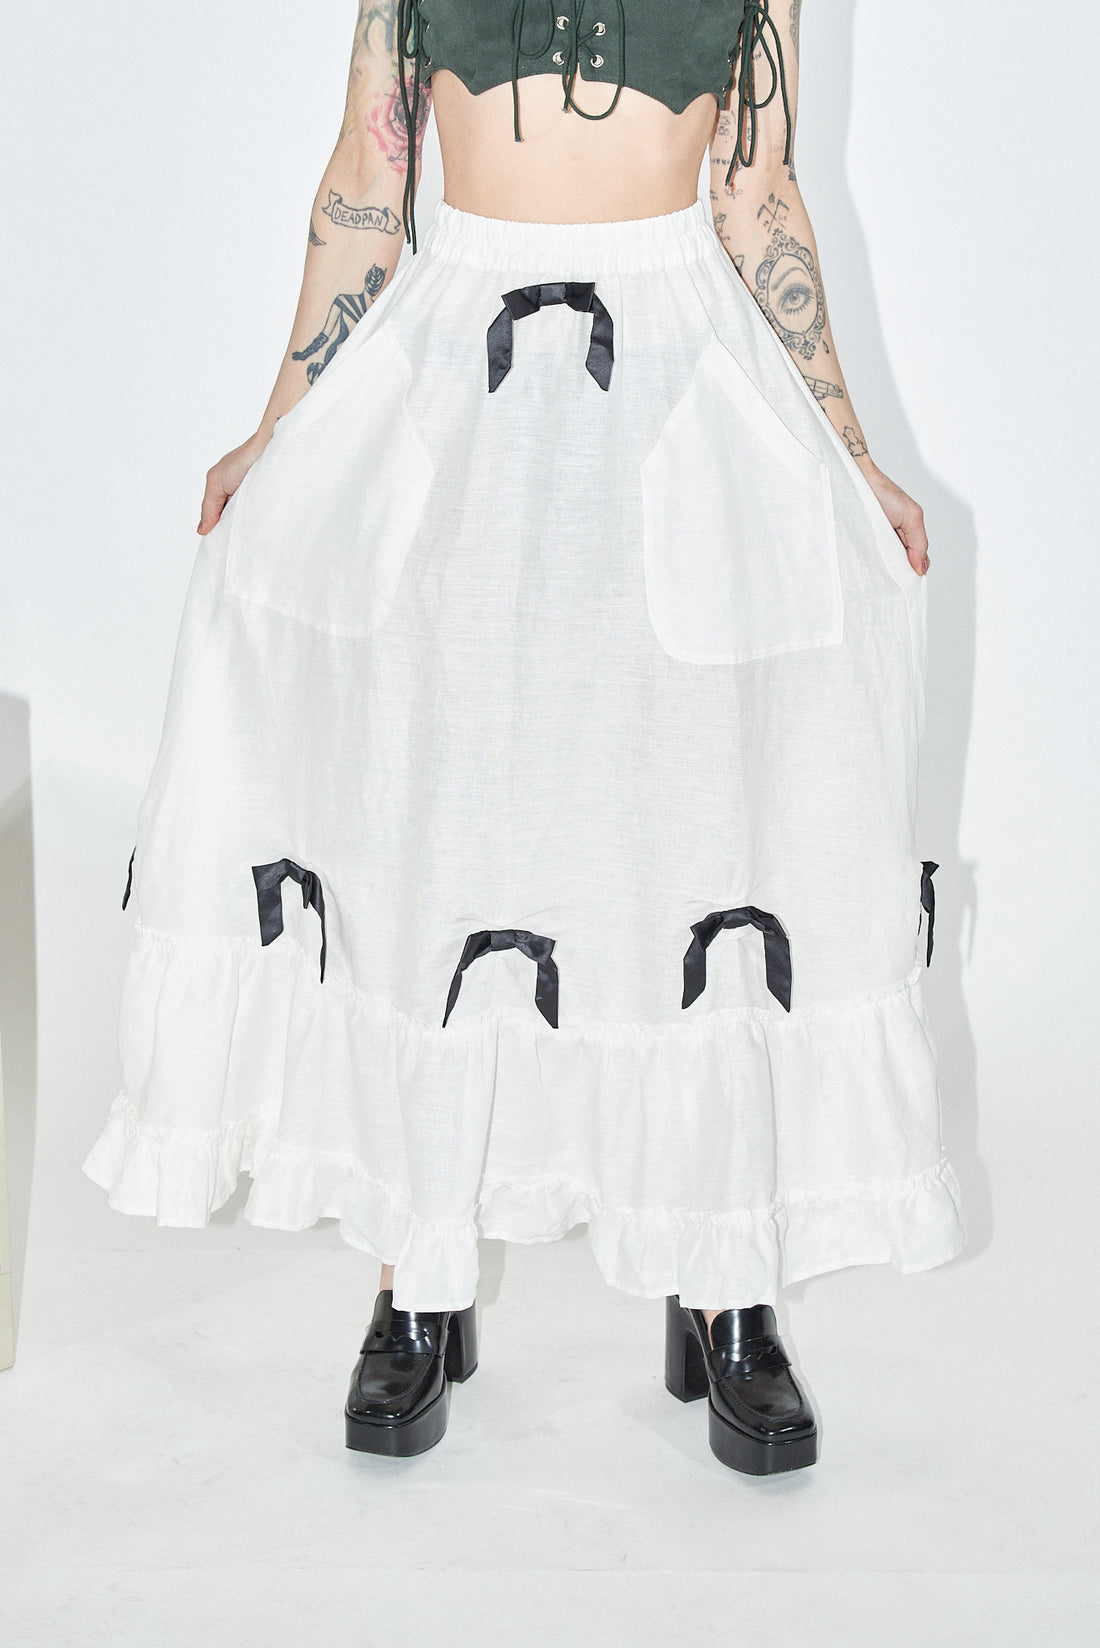 Fancy Lady White Linen Petticoat Bows Skirt